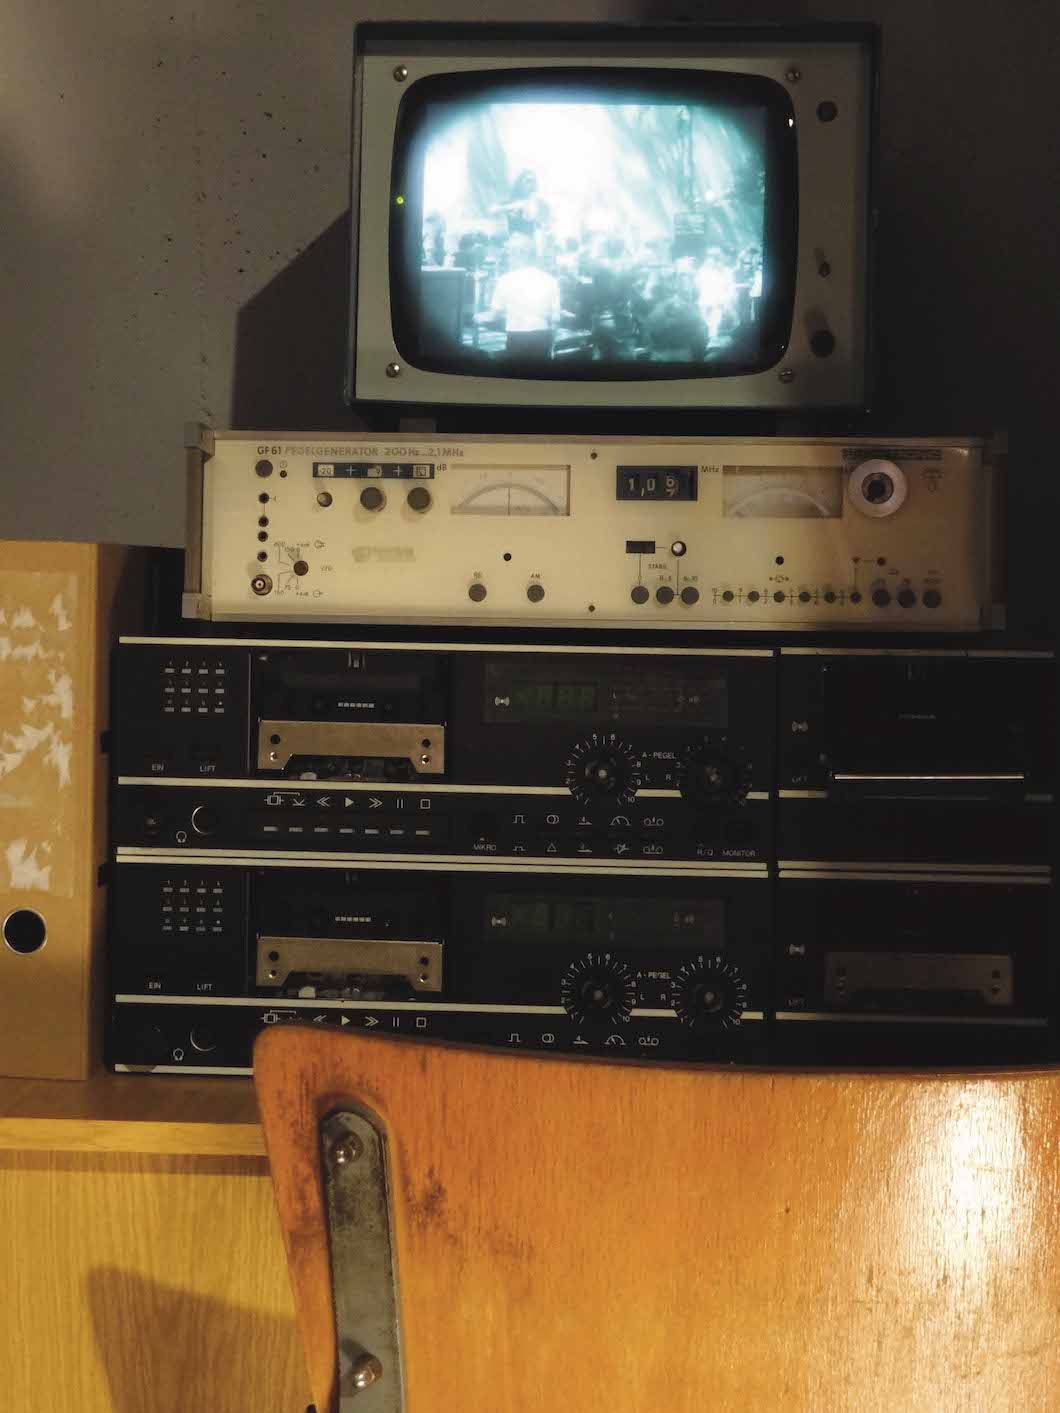 Stasi surveillance equipment, DDR Museum, Berlin, Germany, 2013. Adam Jones, Ph.D./Wikicommons